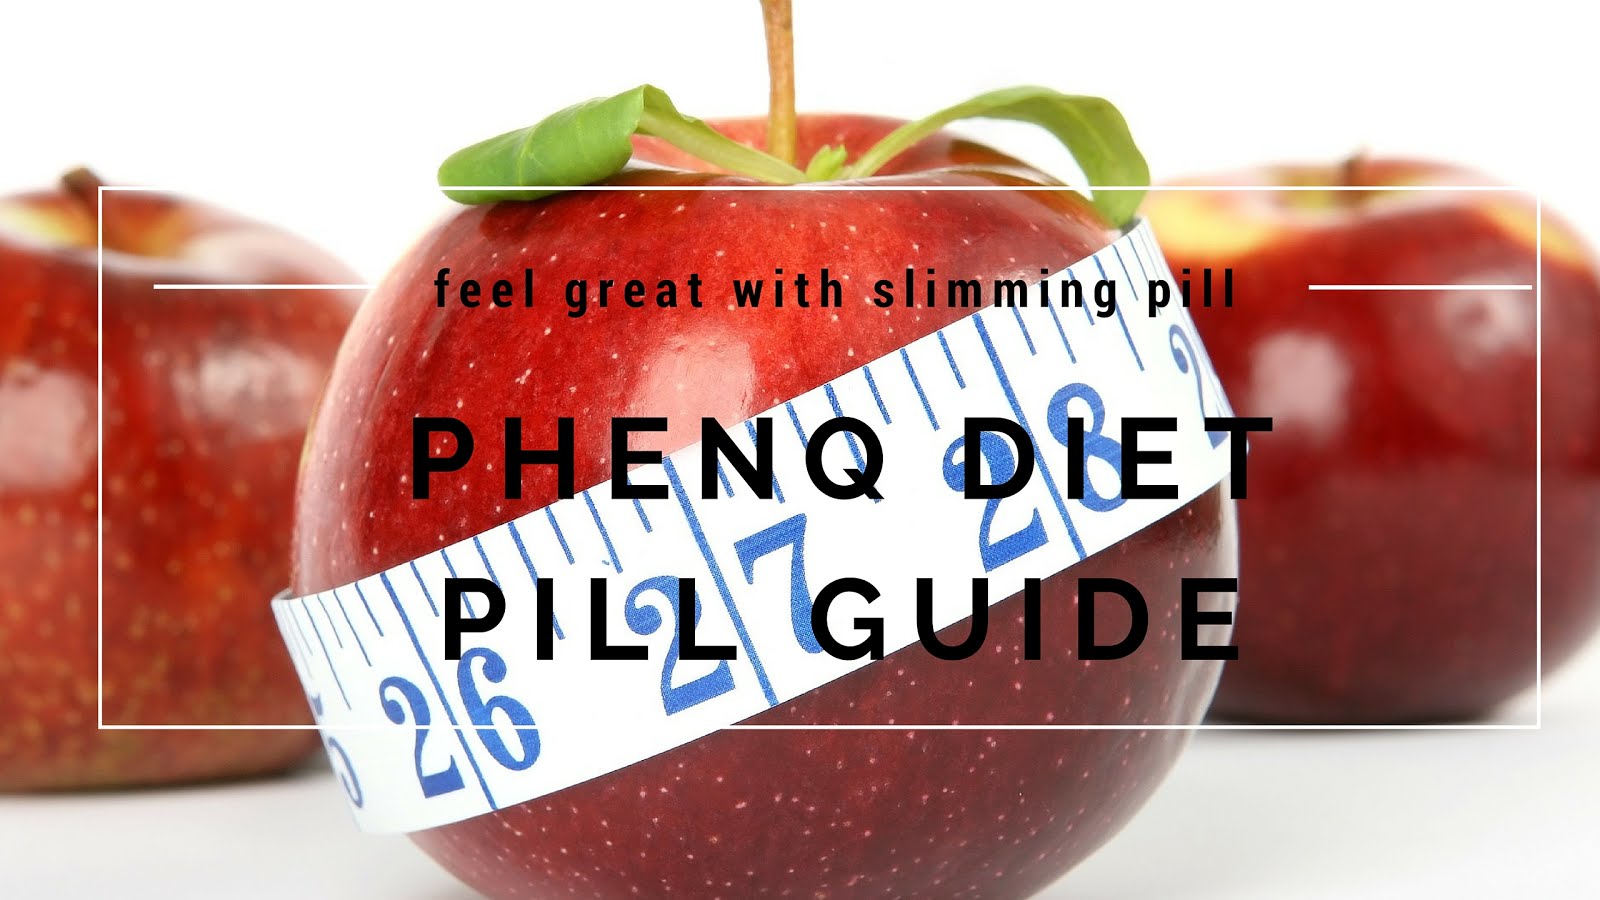 Phenq Diet Pills Guide